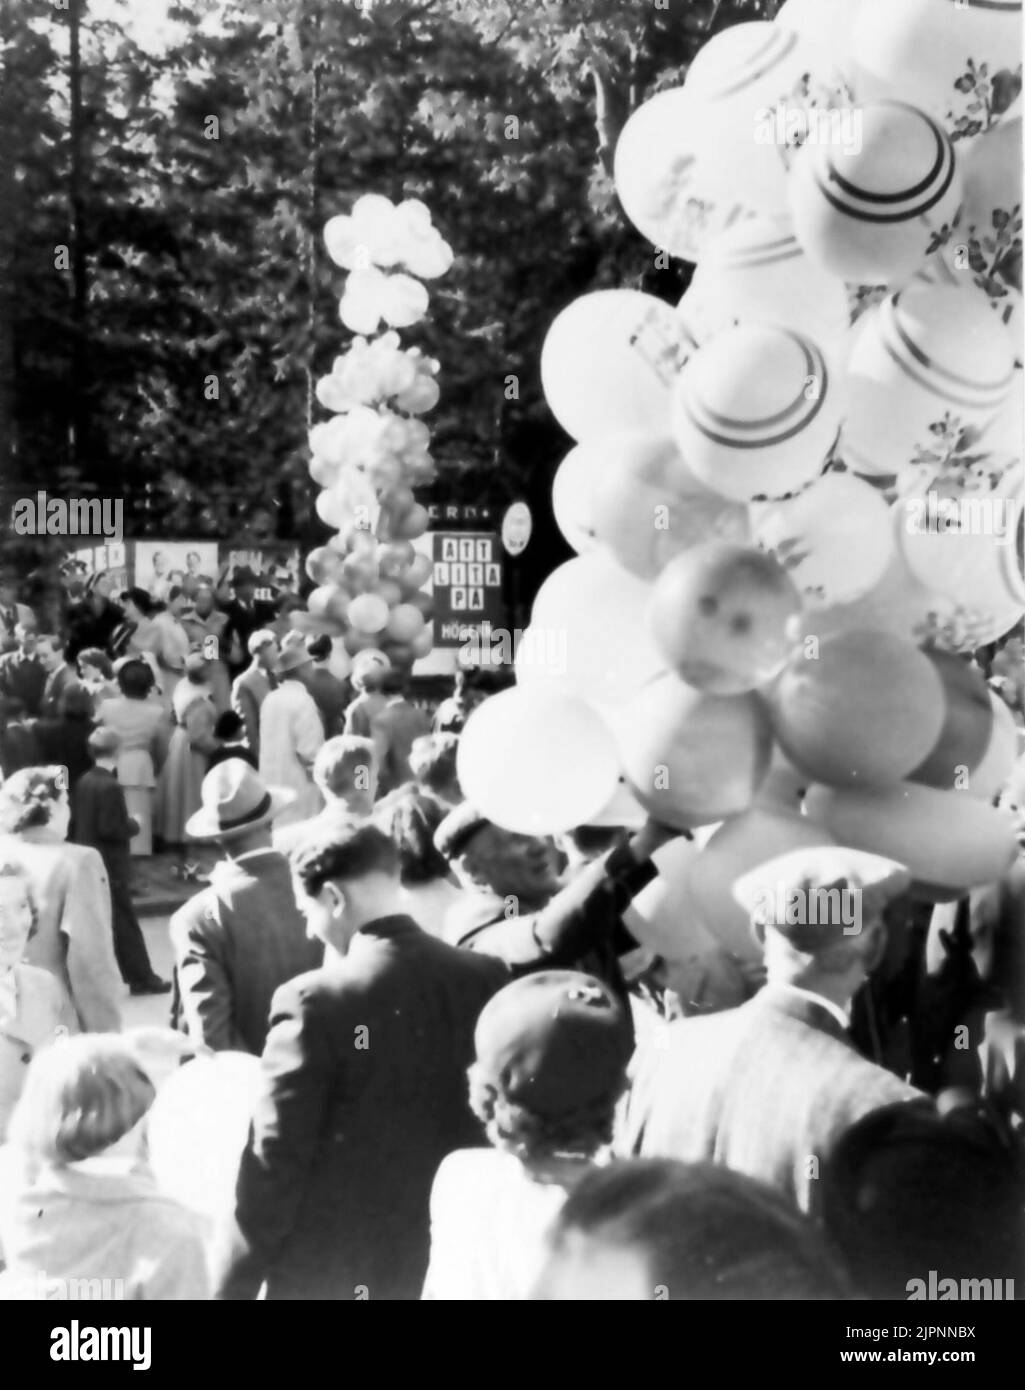 Le ballon arrive sur St. Olofsgatan '. De l'exposition' Falköping dans la photo '1952. 'Ballongkommers på S:t Olofsgatan'. Fån utställningen 'Falköping i bild' 1952. Banque D'Images